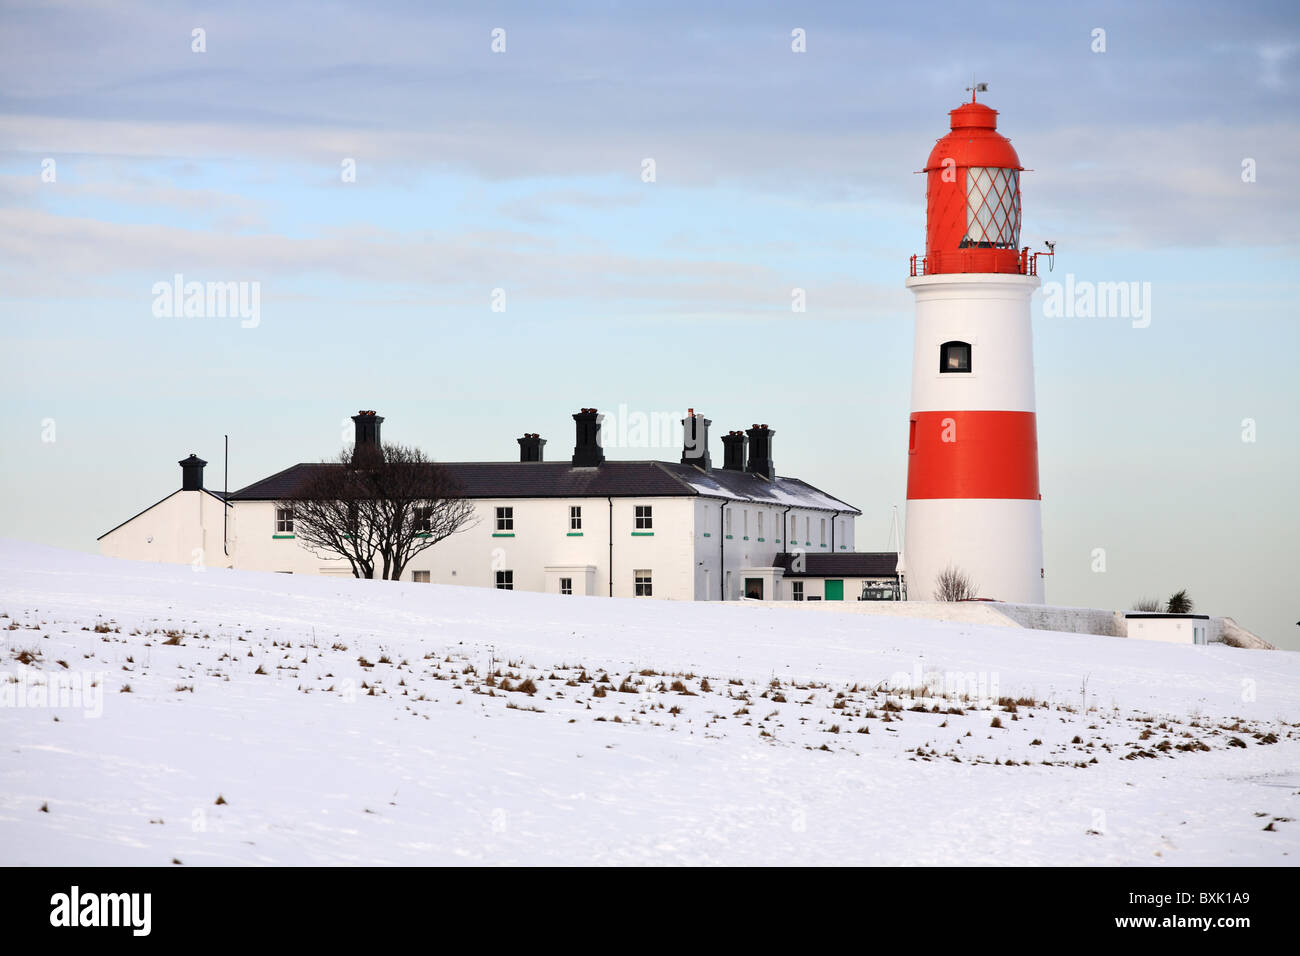 Souter lighthouse, Whitburn, with snow on the ground. England, UK. Stock Photo